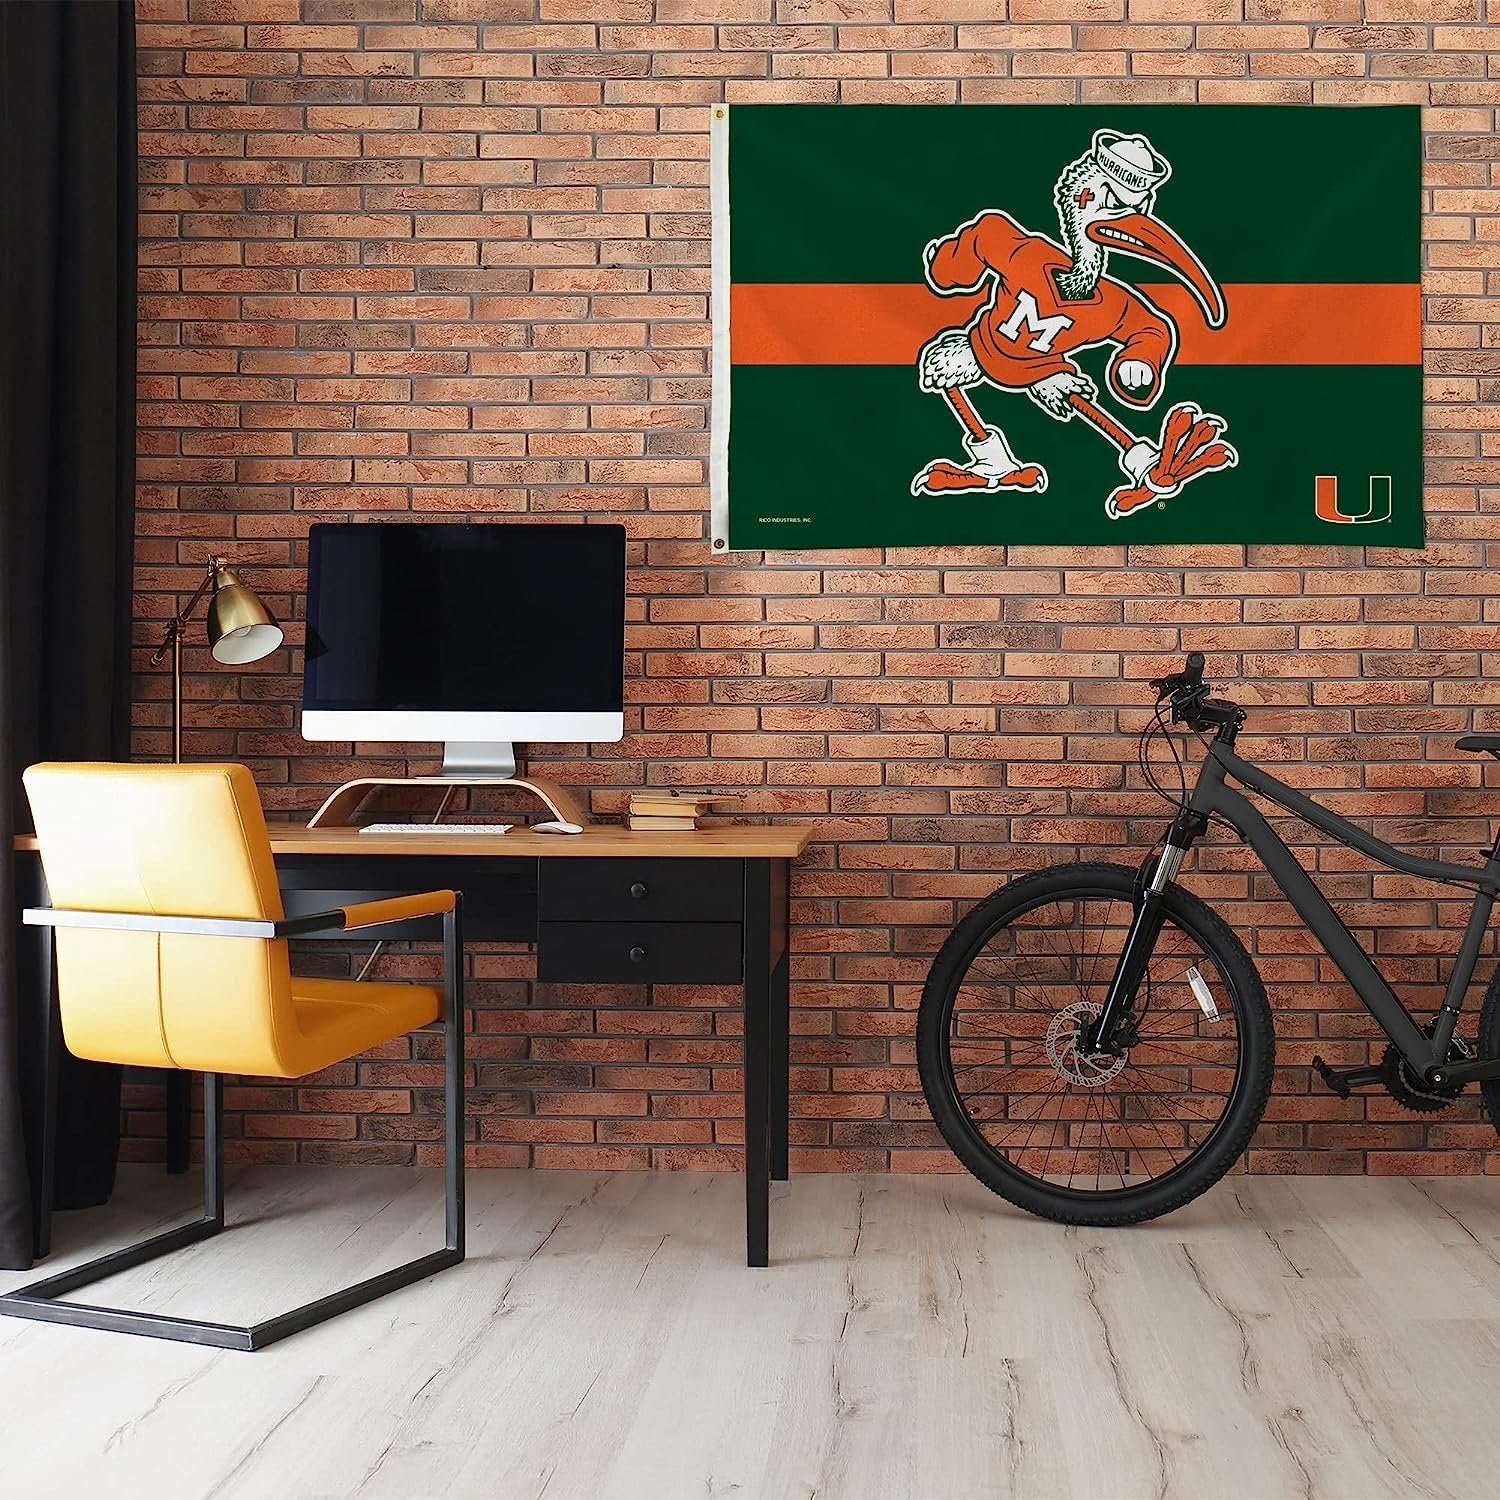 University of Miami Hurricanes Flag Banner 3x5 Feet Metal Grommets Ibis Mascot Design